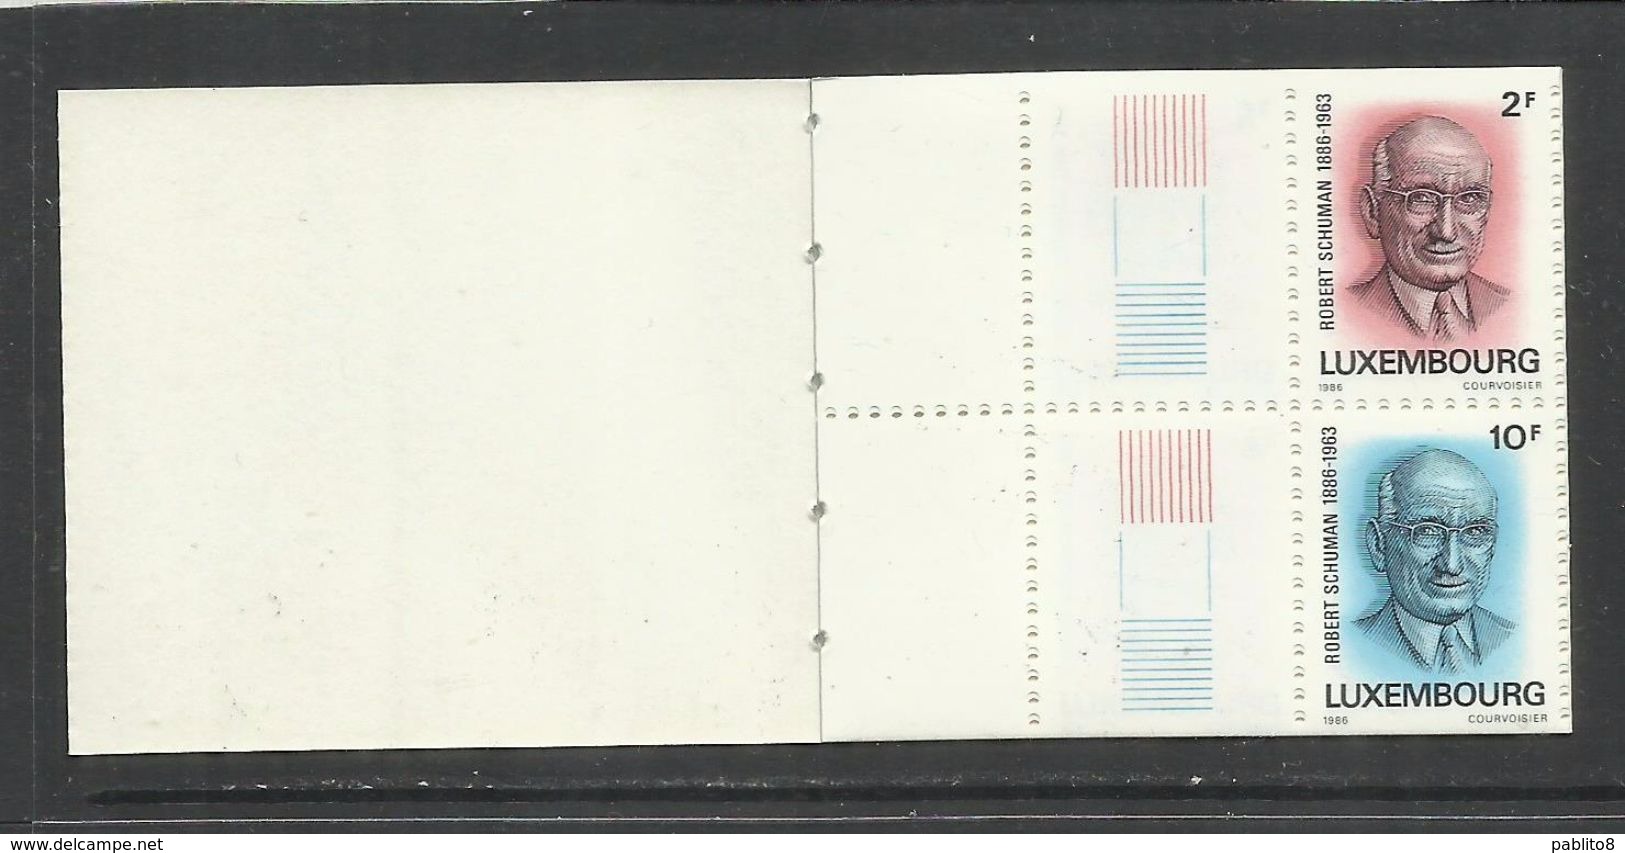 LUXEMBOURG LUSSEMBURGO 1986 SCHUMAN BOOKLET LIBRETTO NUOVO COMPLETO COMPLETE UNUSED MNH - Postzegelboekjes